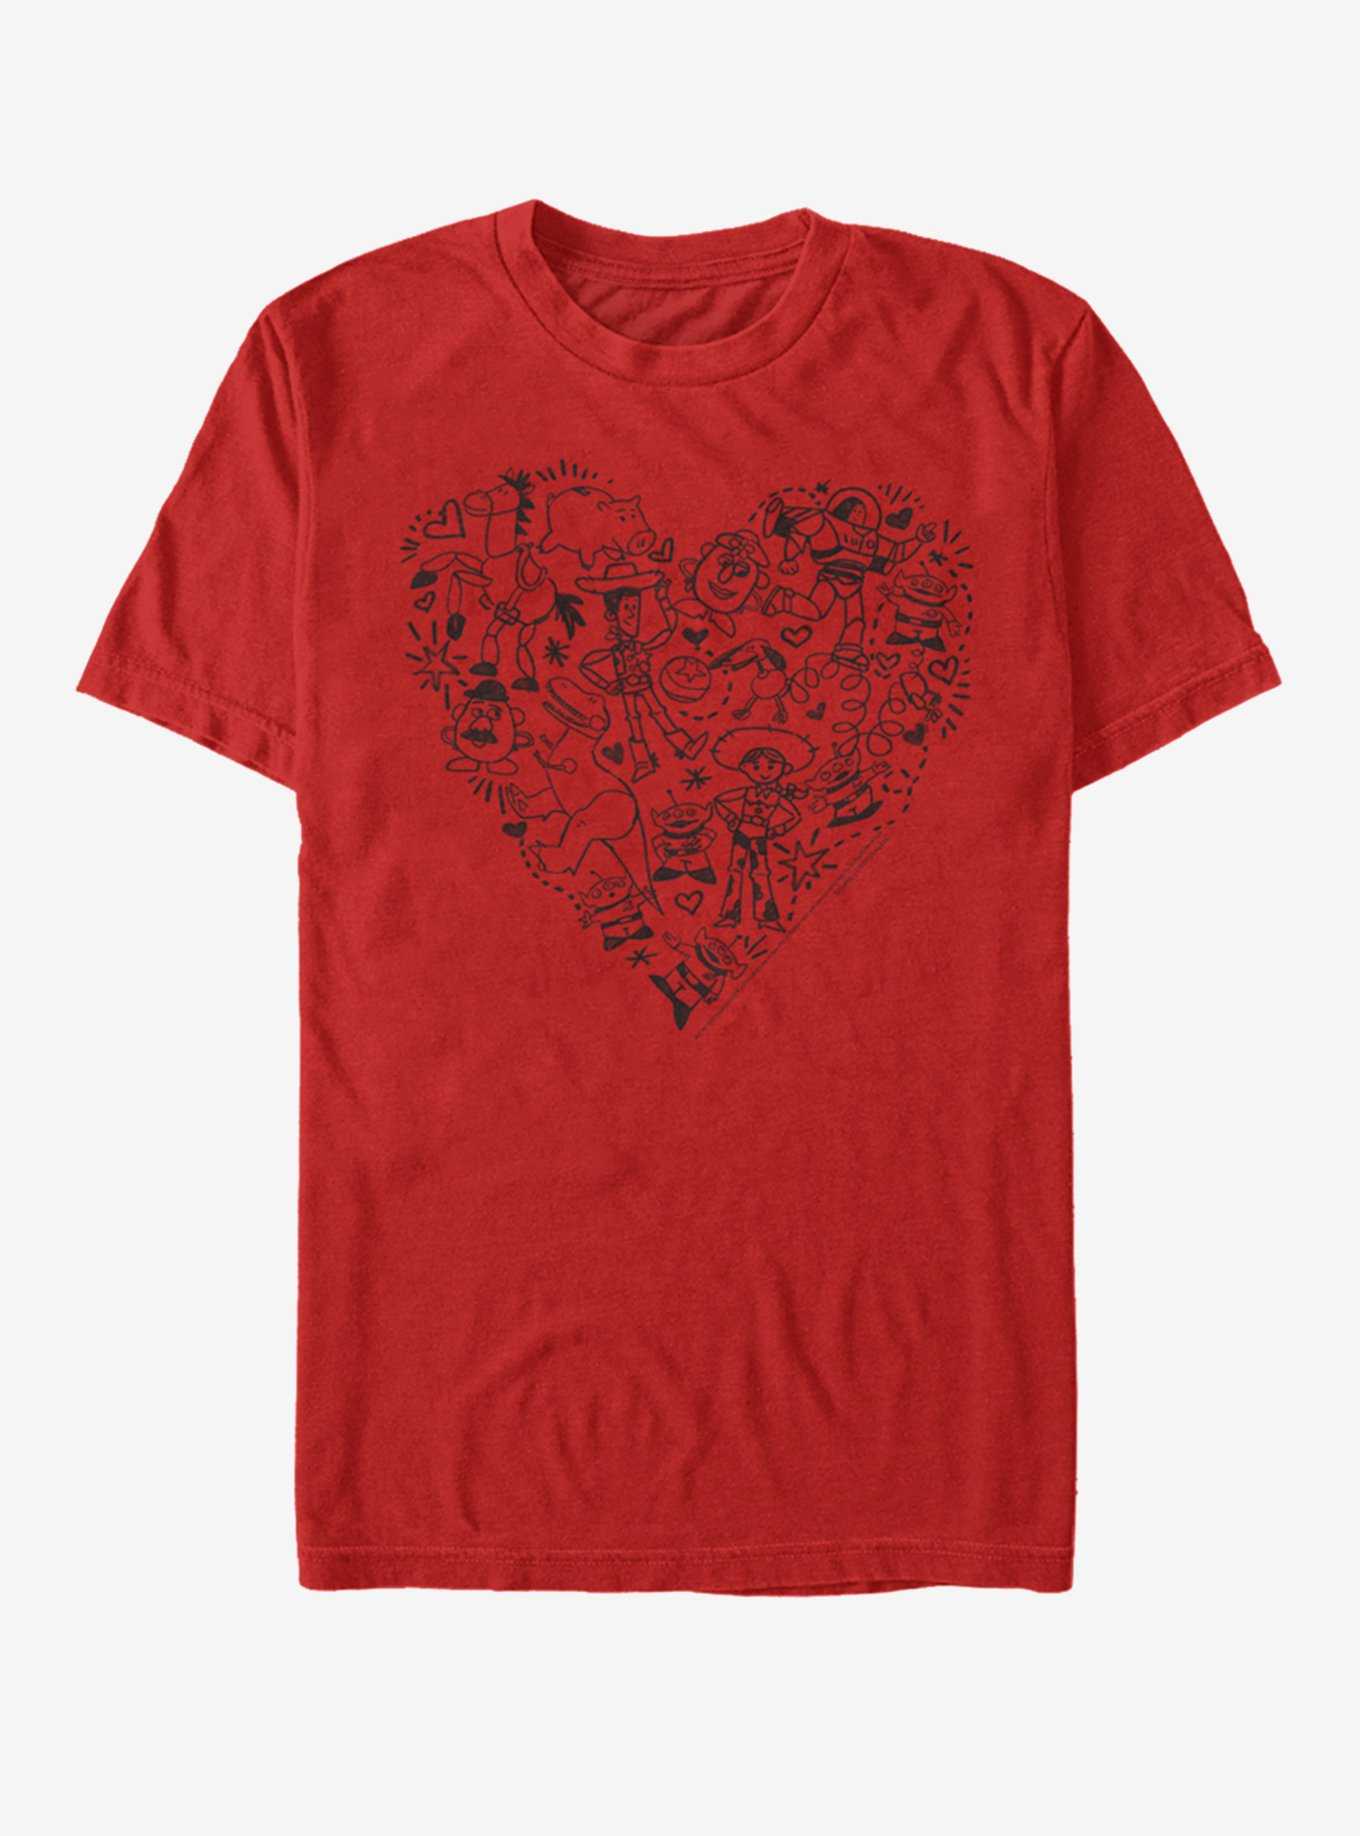 Disney Pixar Toy Story Group Doodle Heart T-Shirt, , hi-res